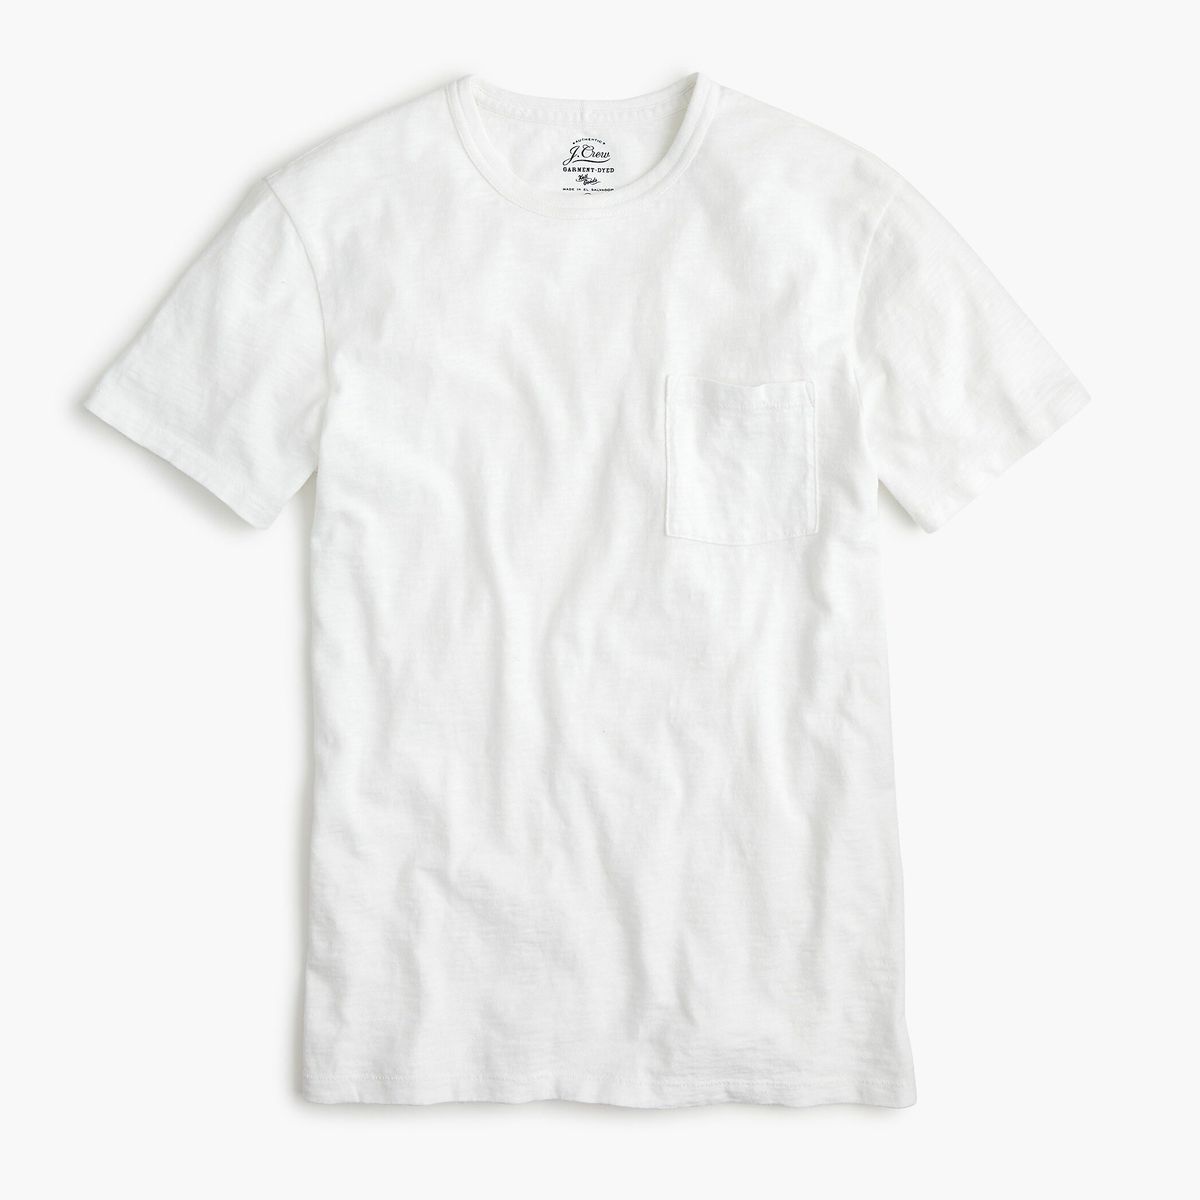 high quality white t shirt